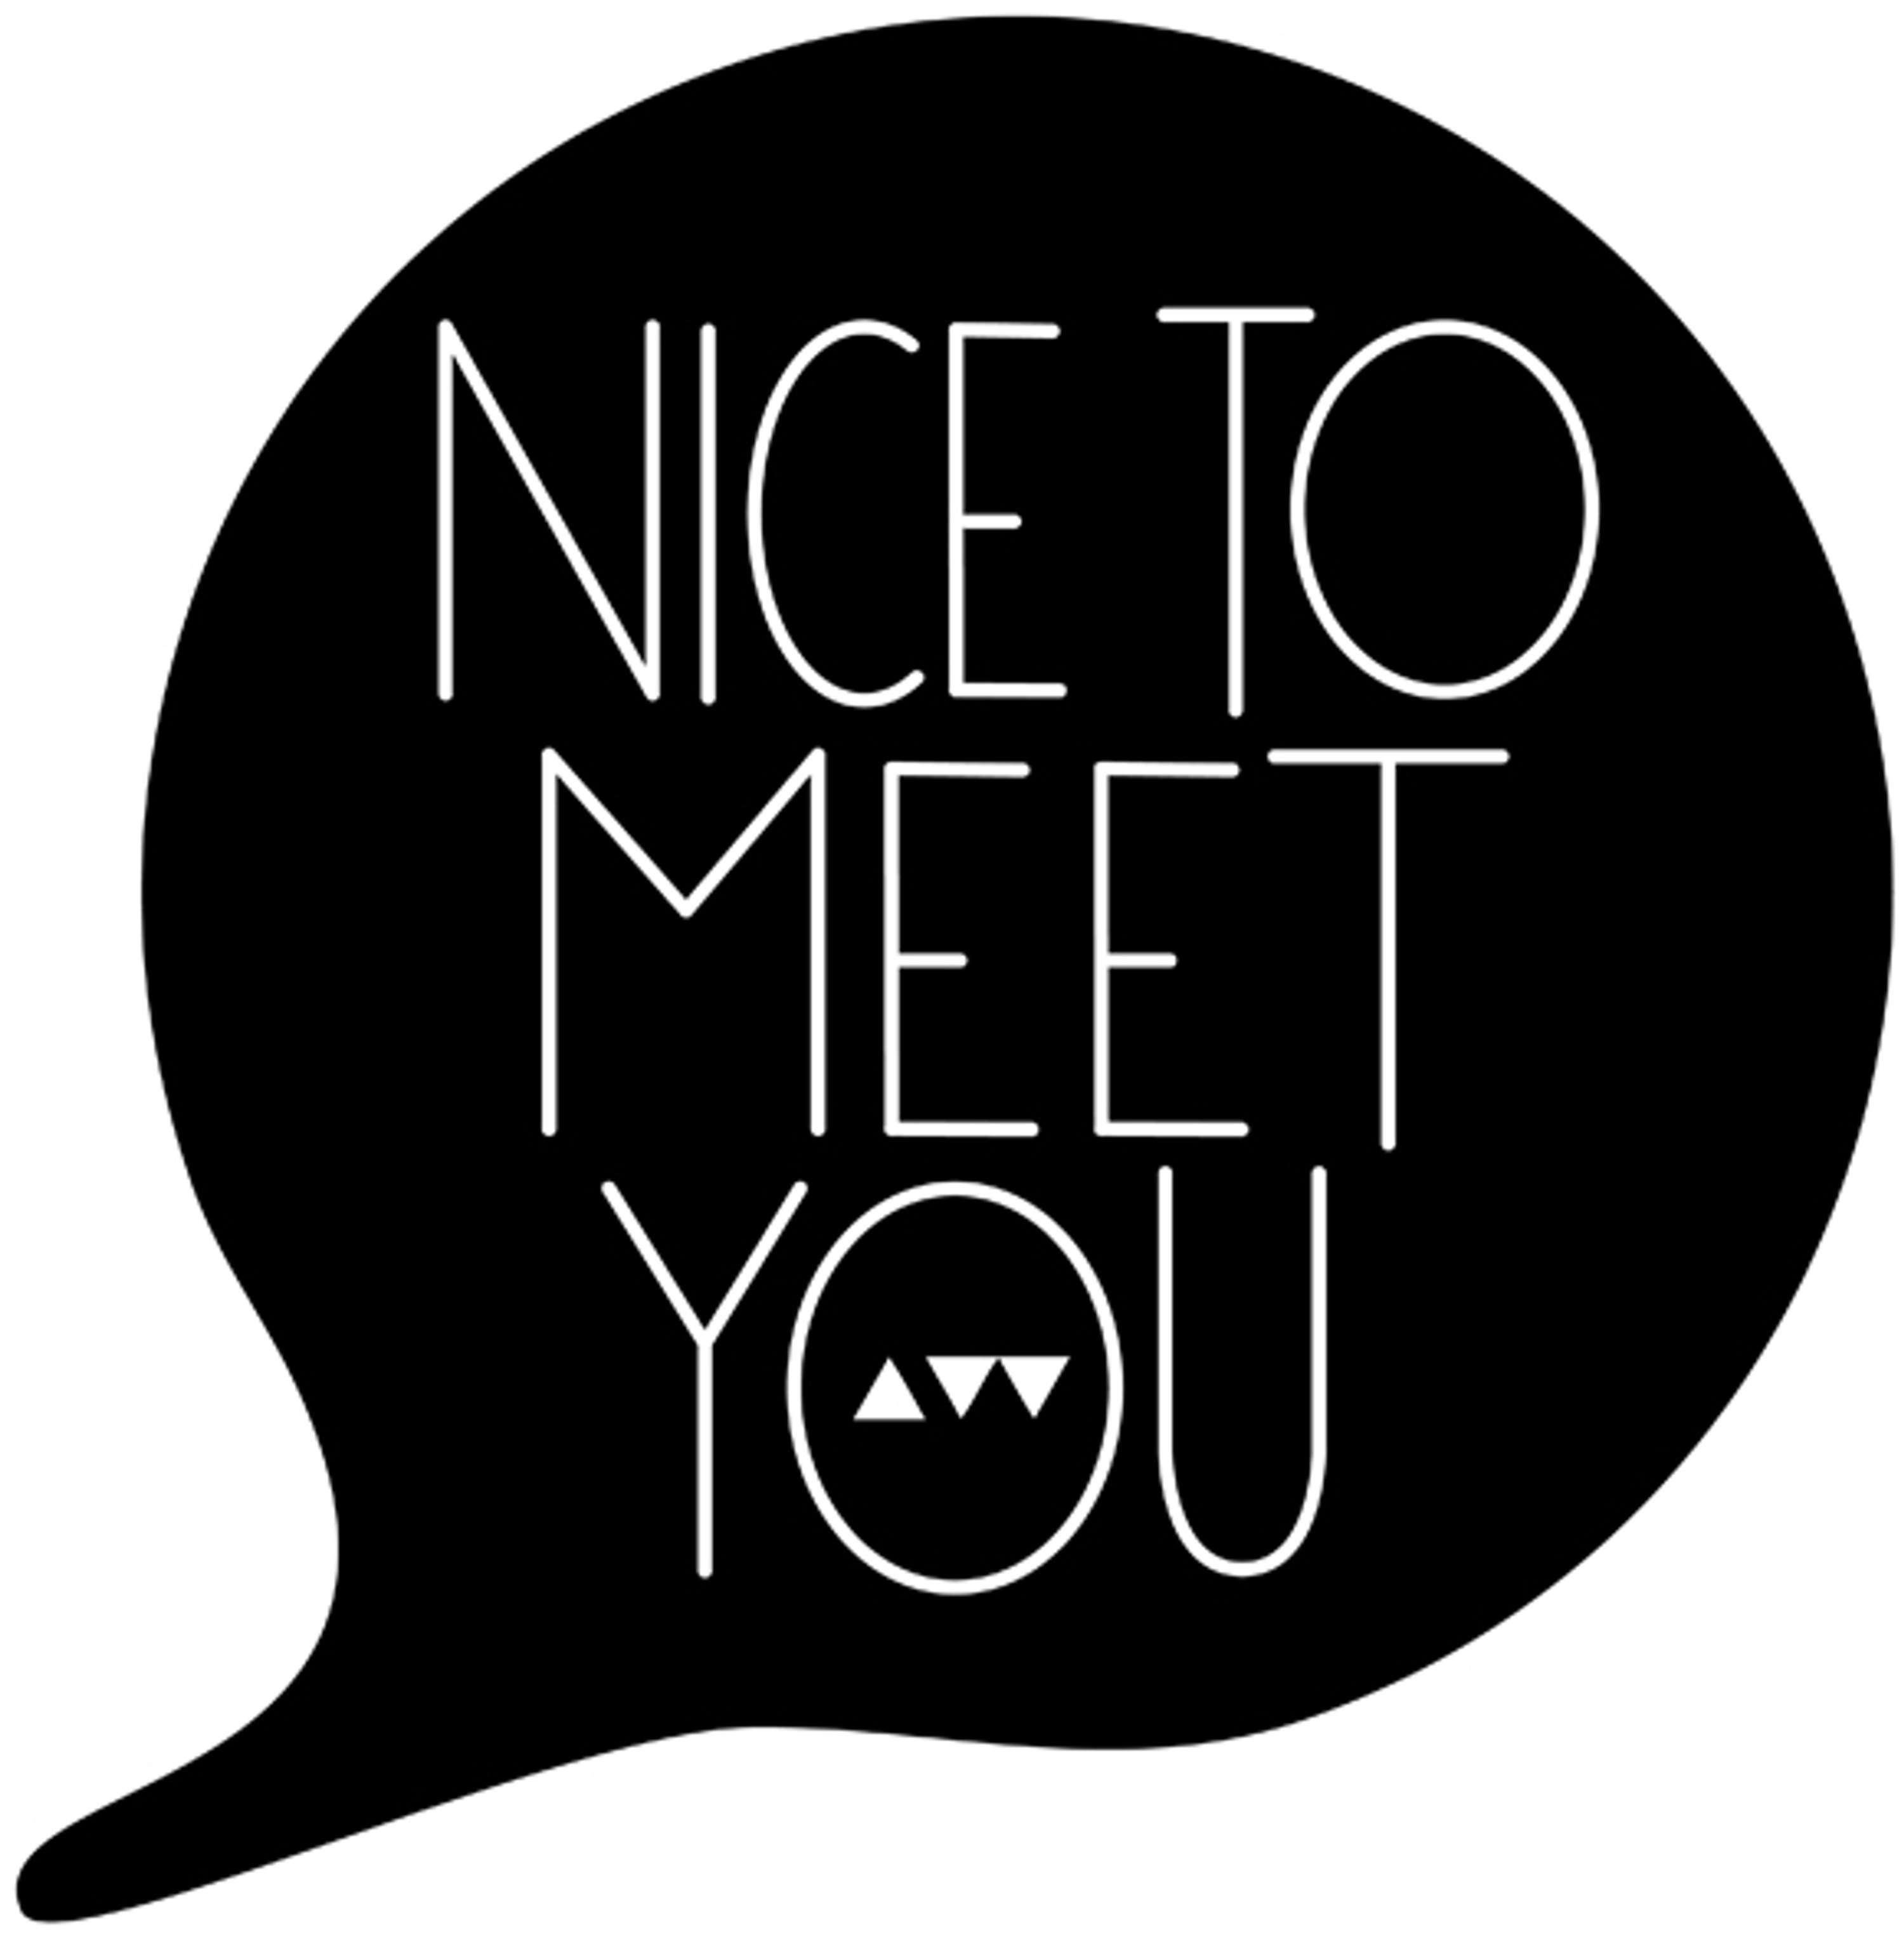 Please be nice to me. Nice to meet you. Nice to meet you картинка. Hello nice to meet you. Nice meeting you.